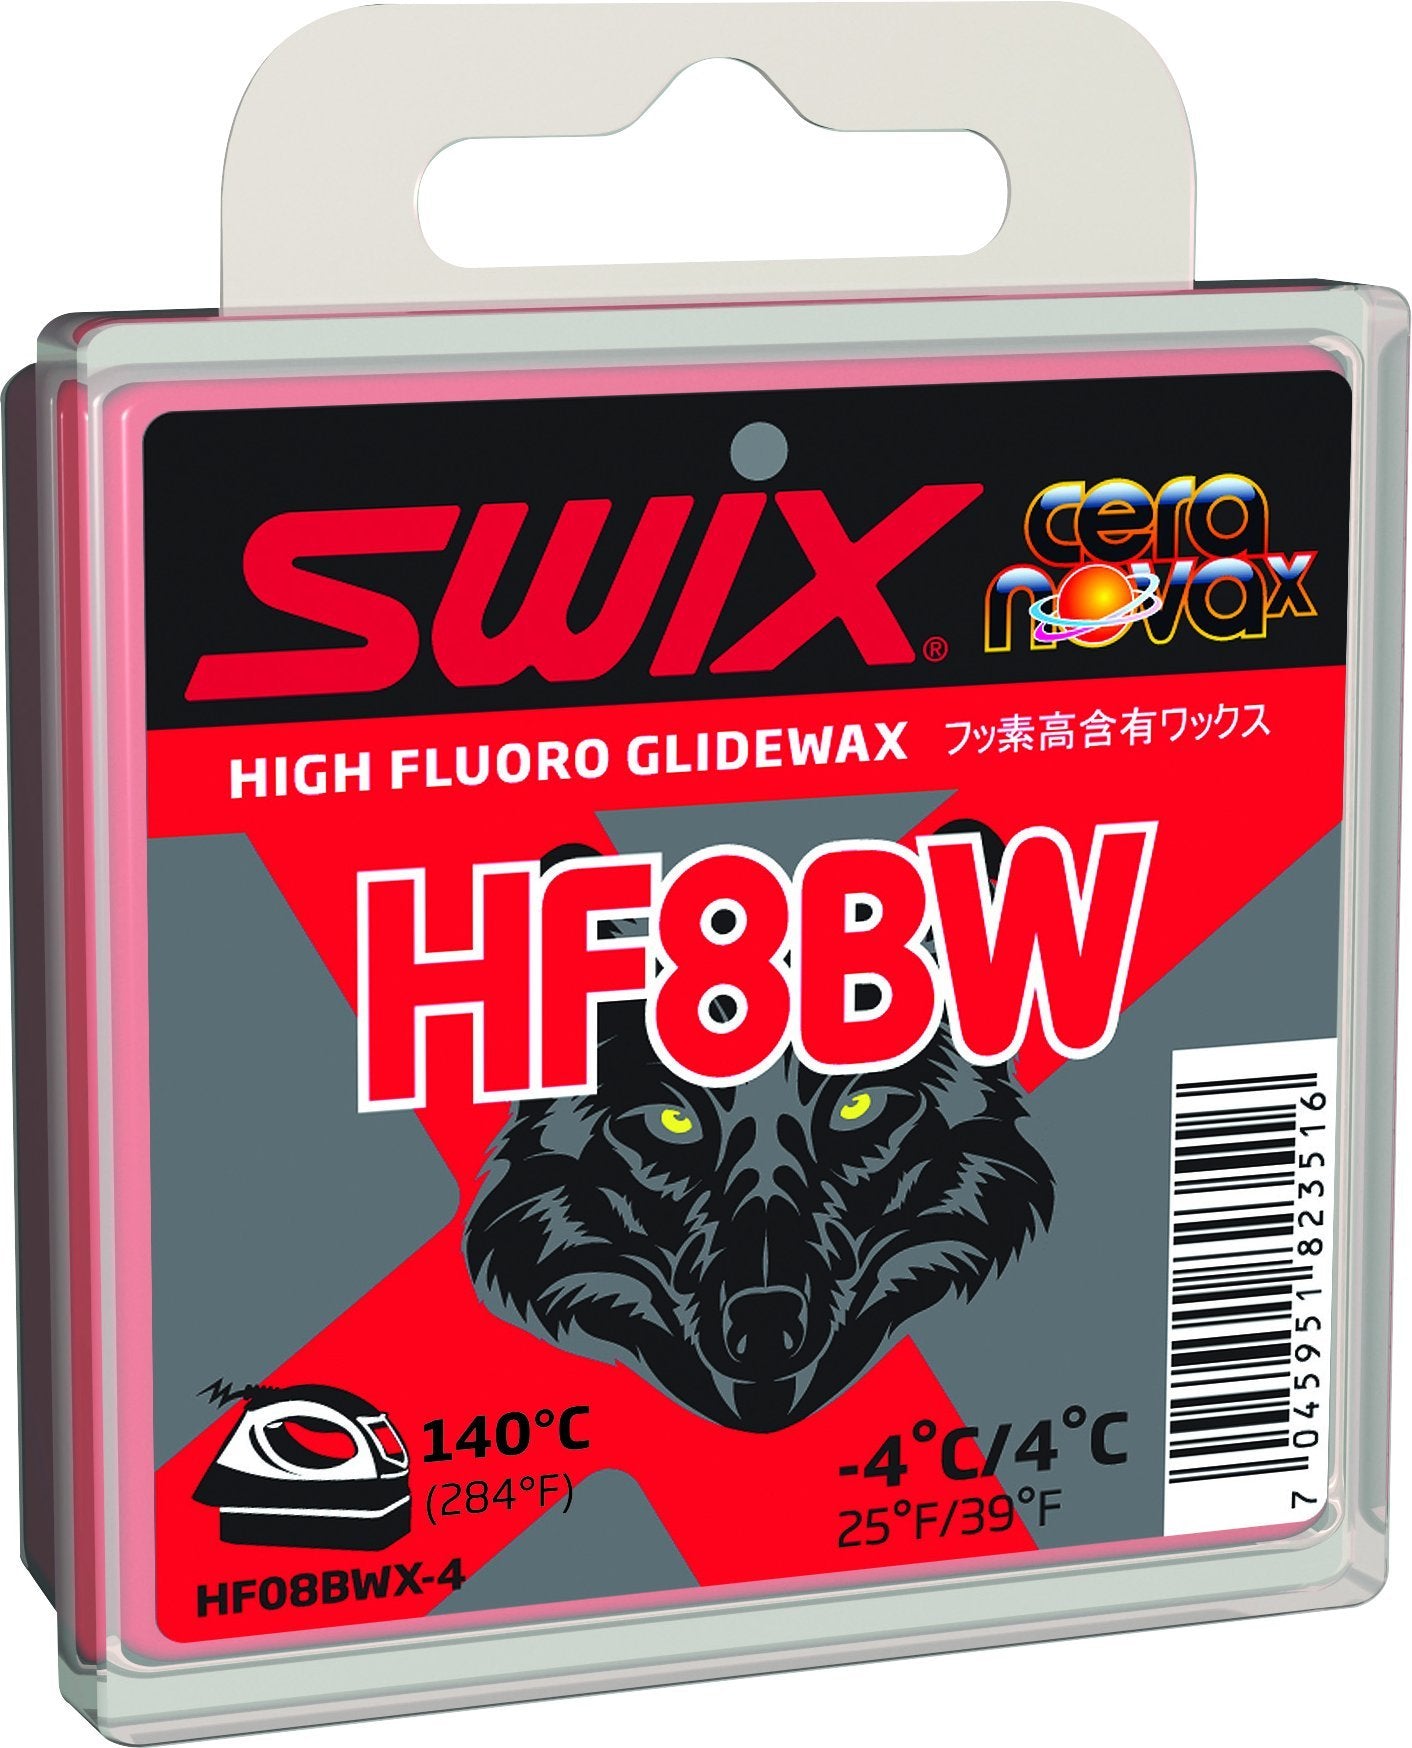 Swix Glidewax HF8BWX -4 degC/ 4degC